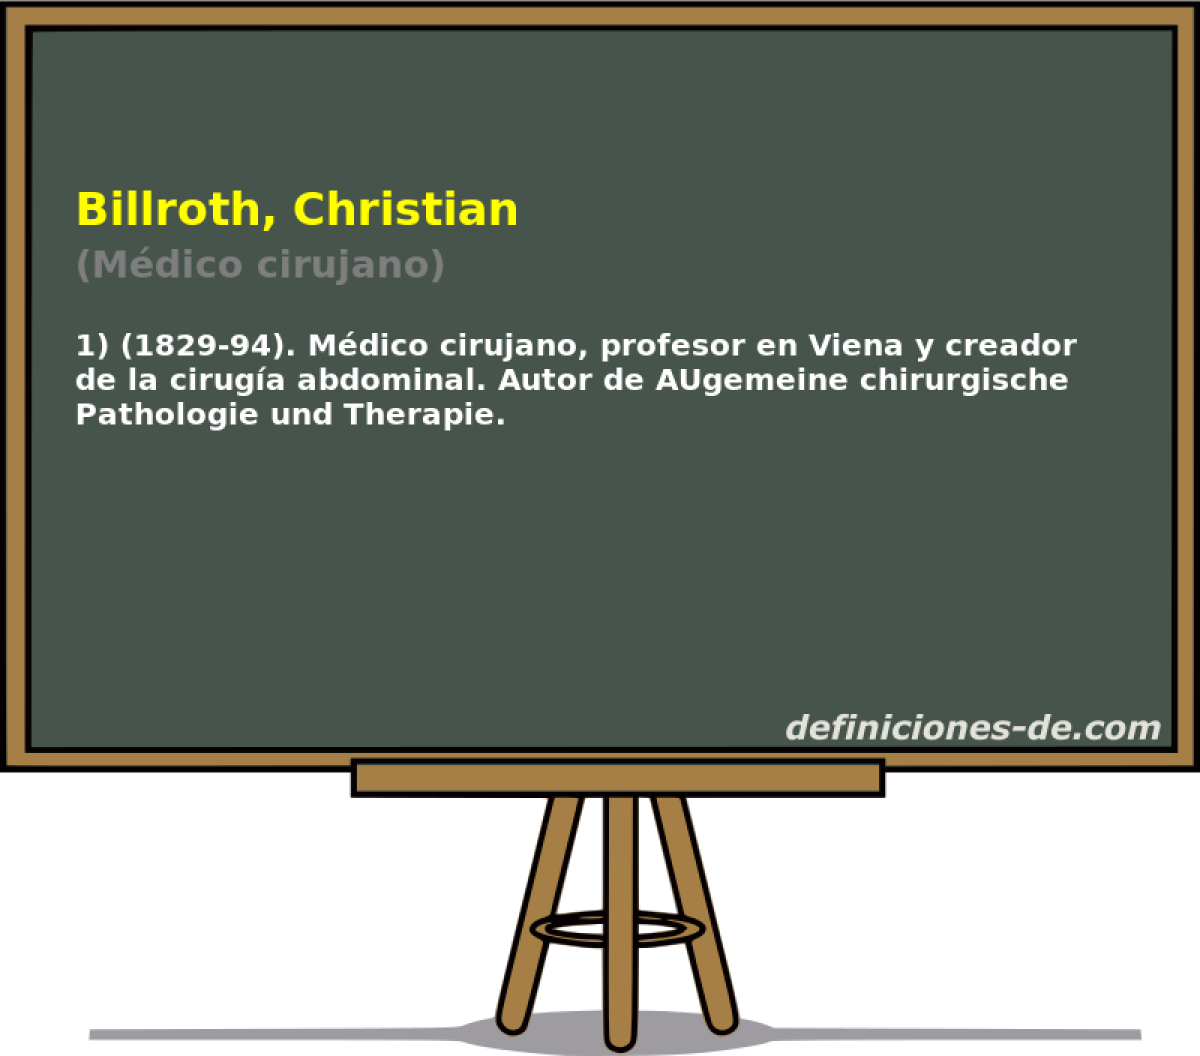 Billroth, Christian (Mdico cirujano)